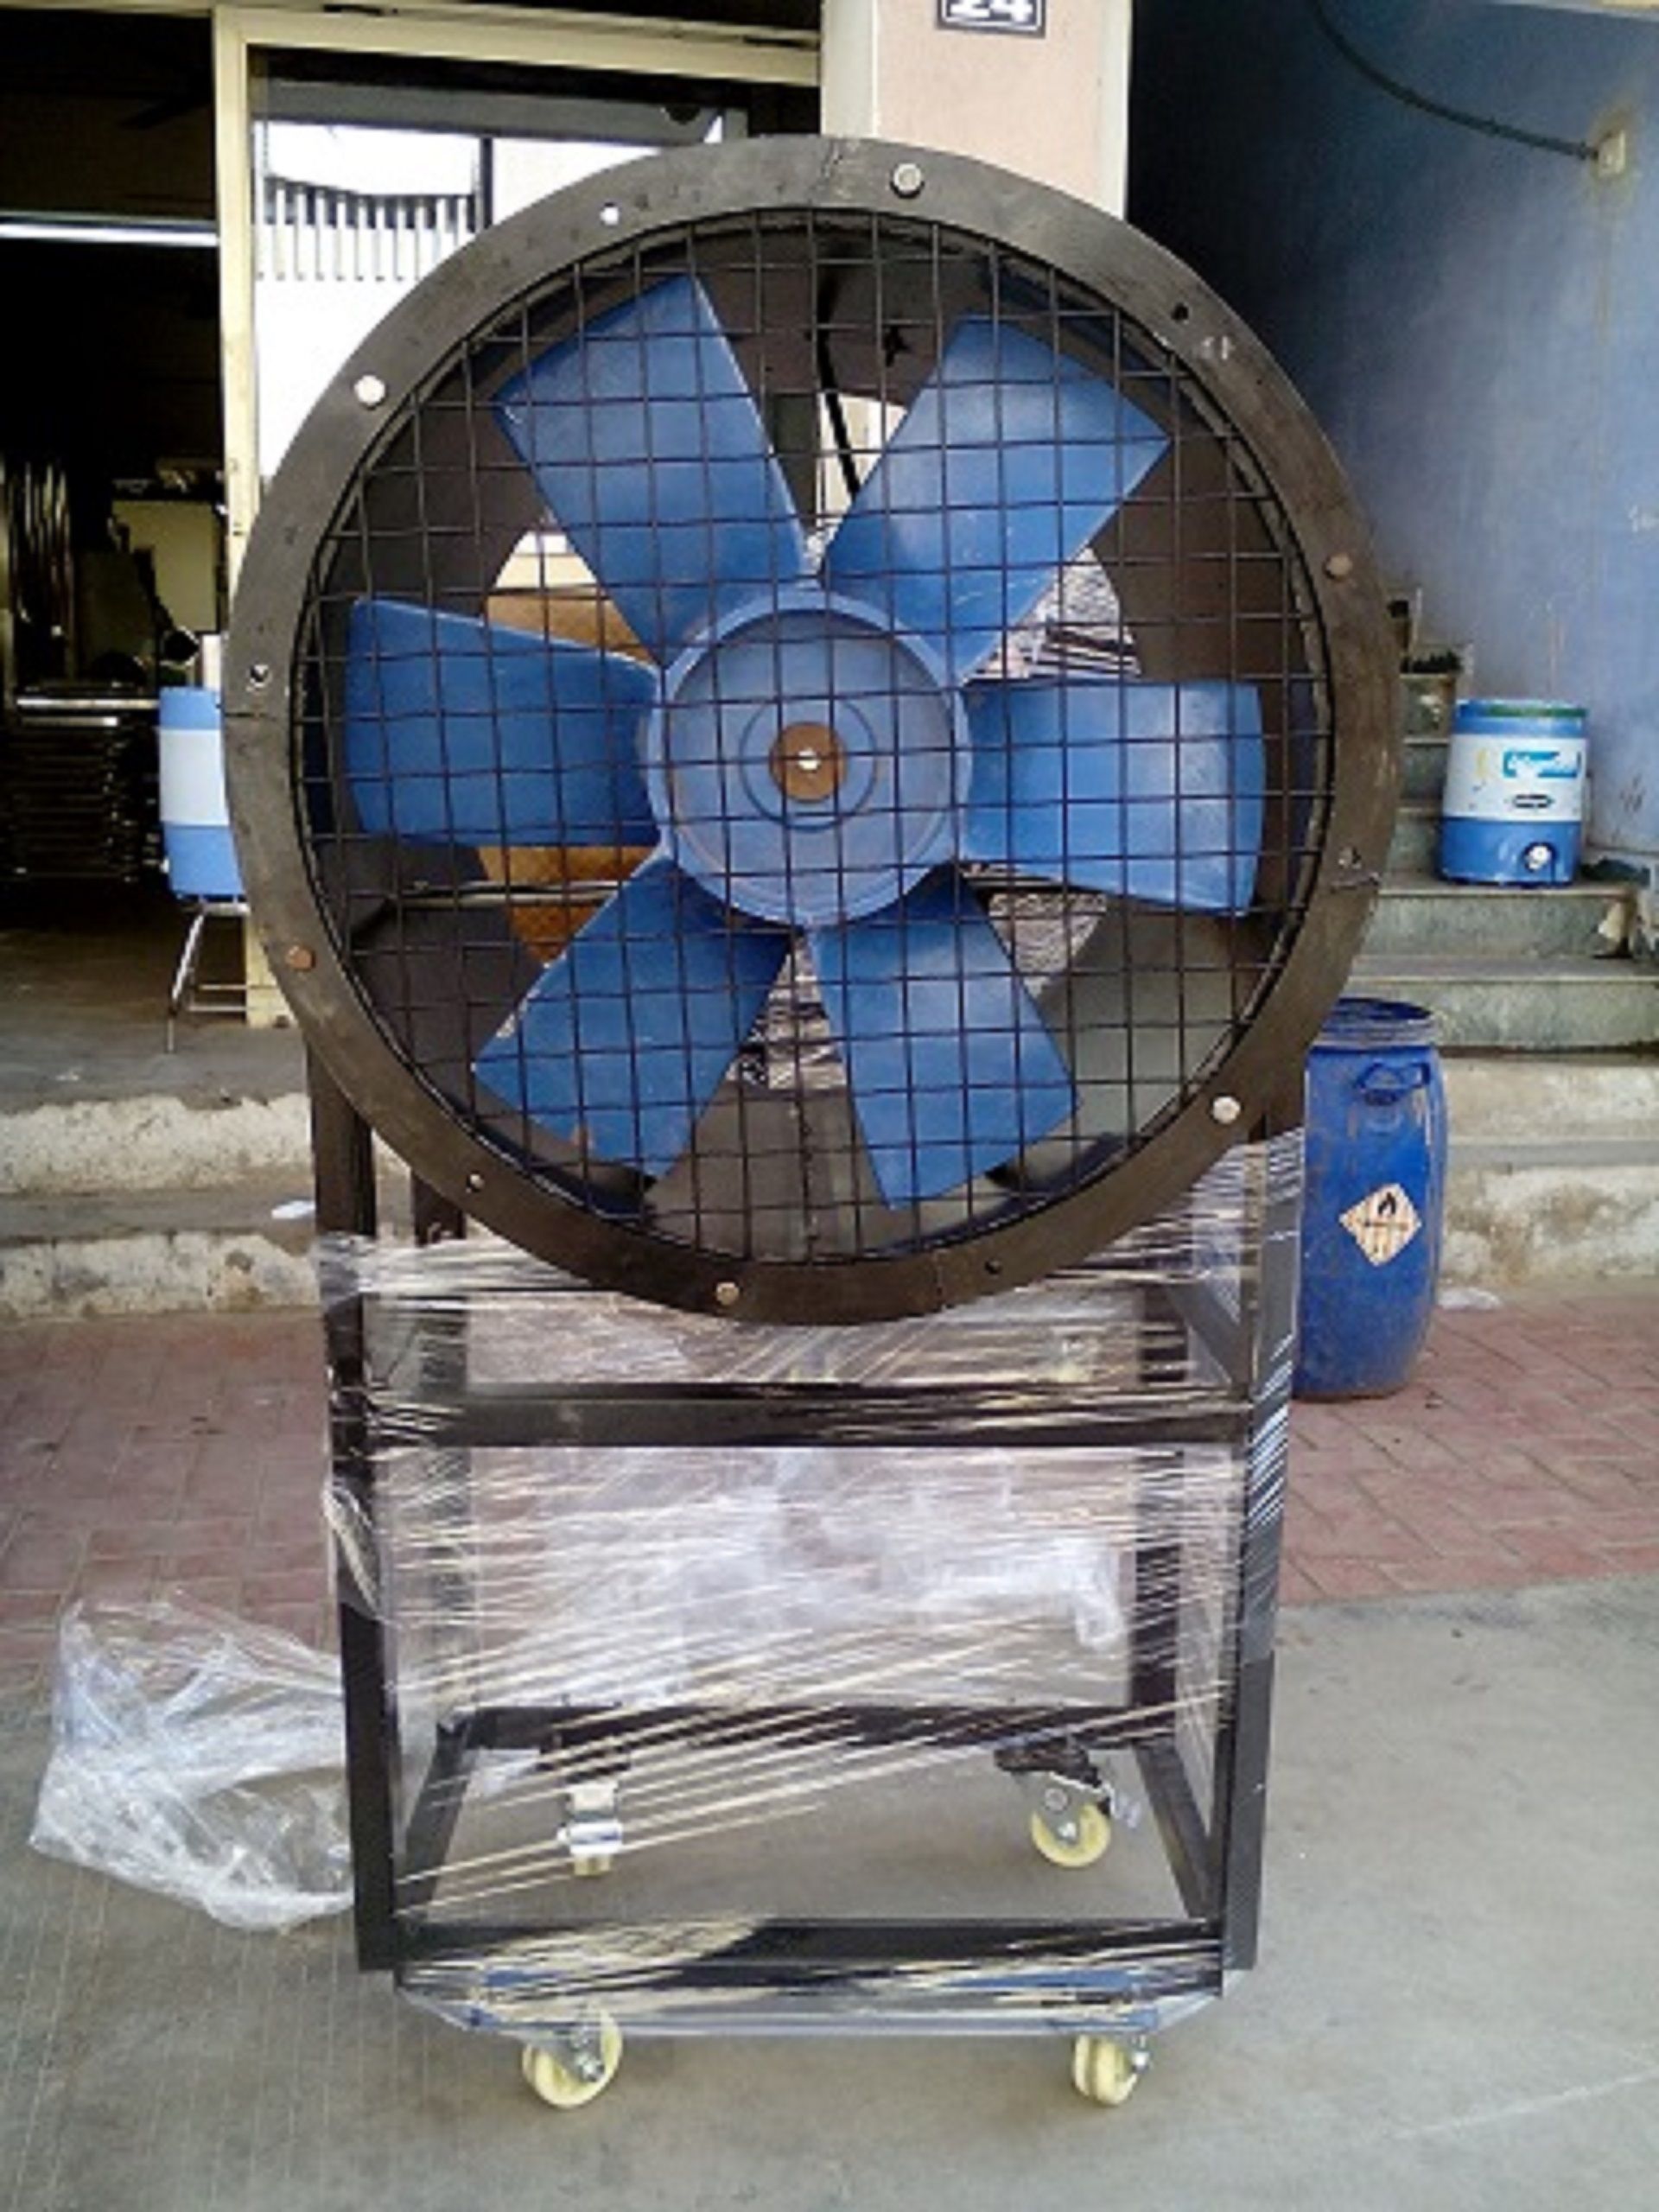 Portable Man Cooler Fan